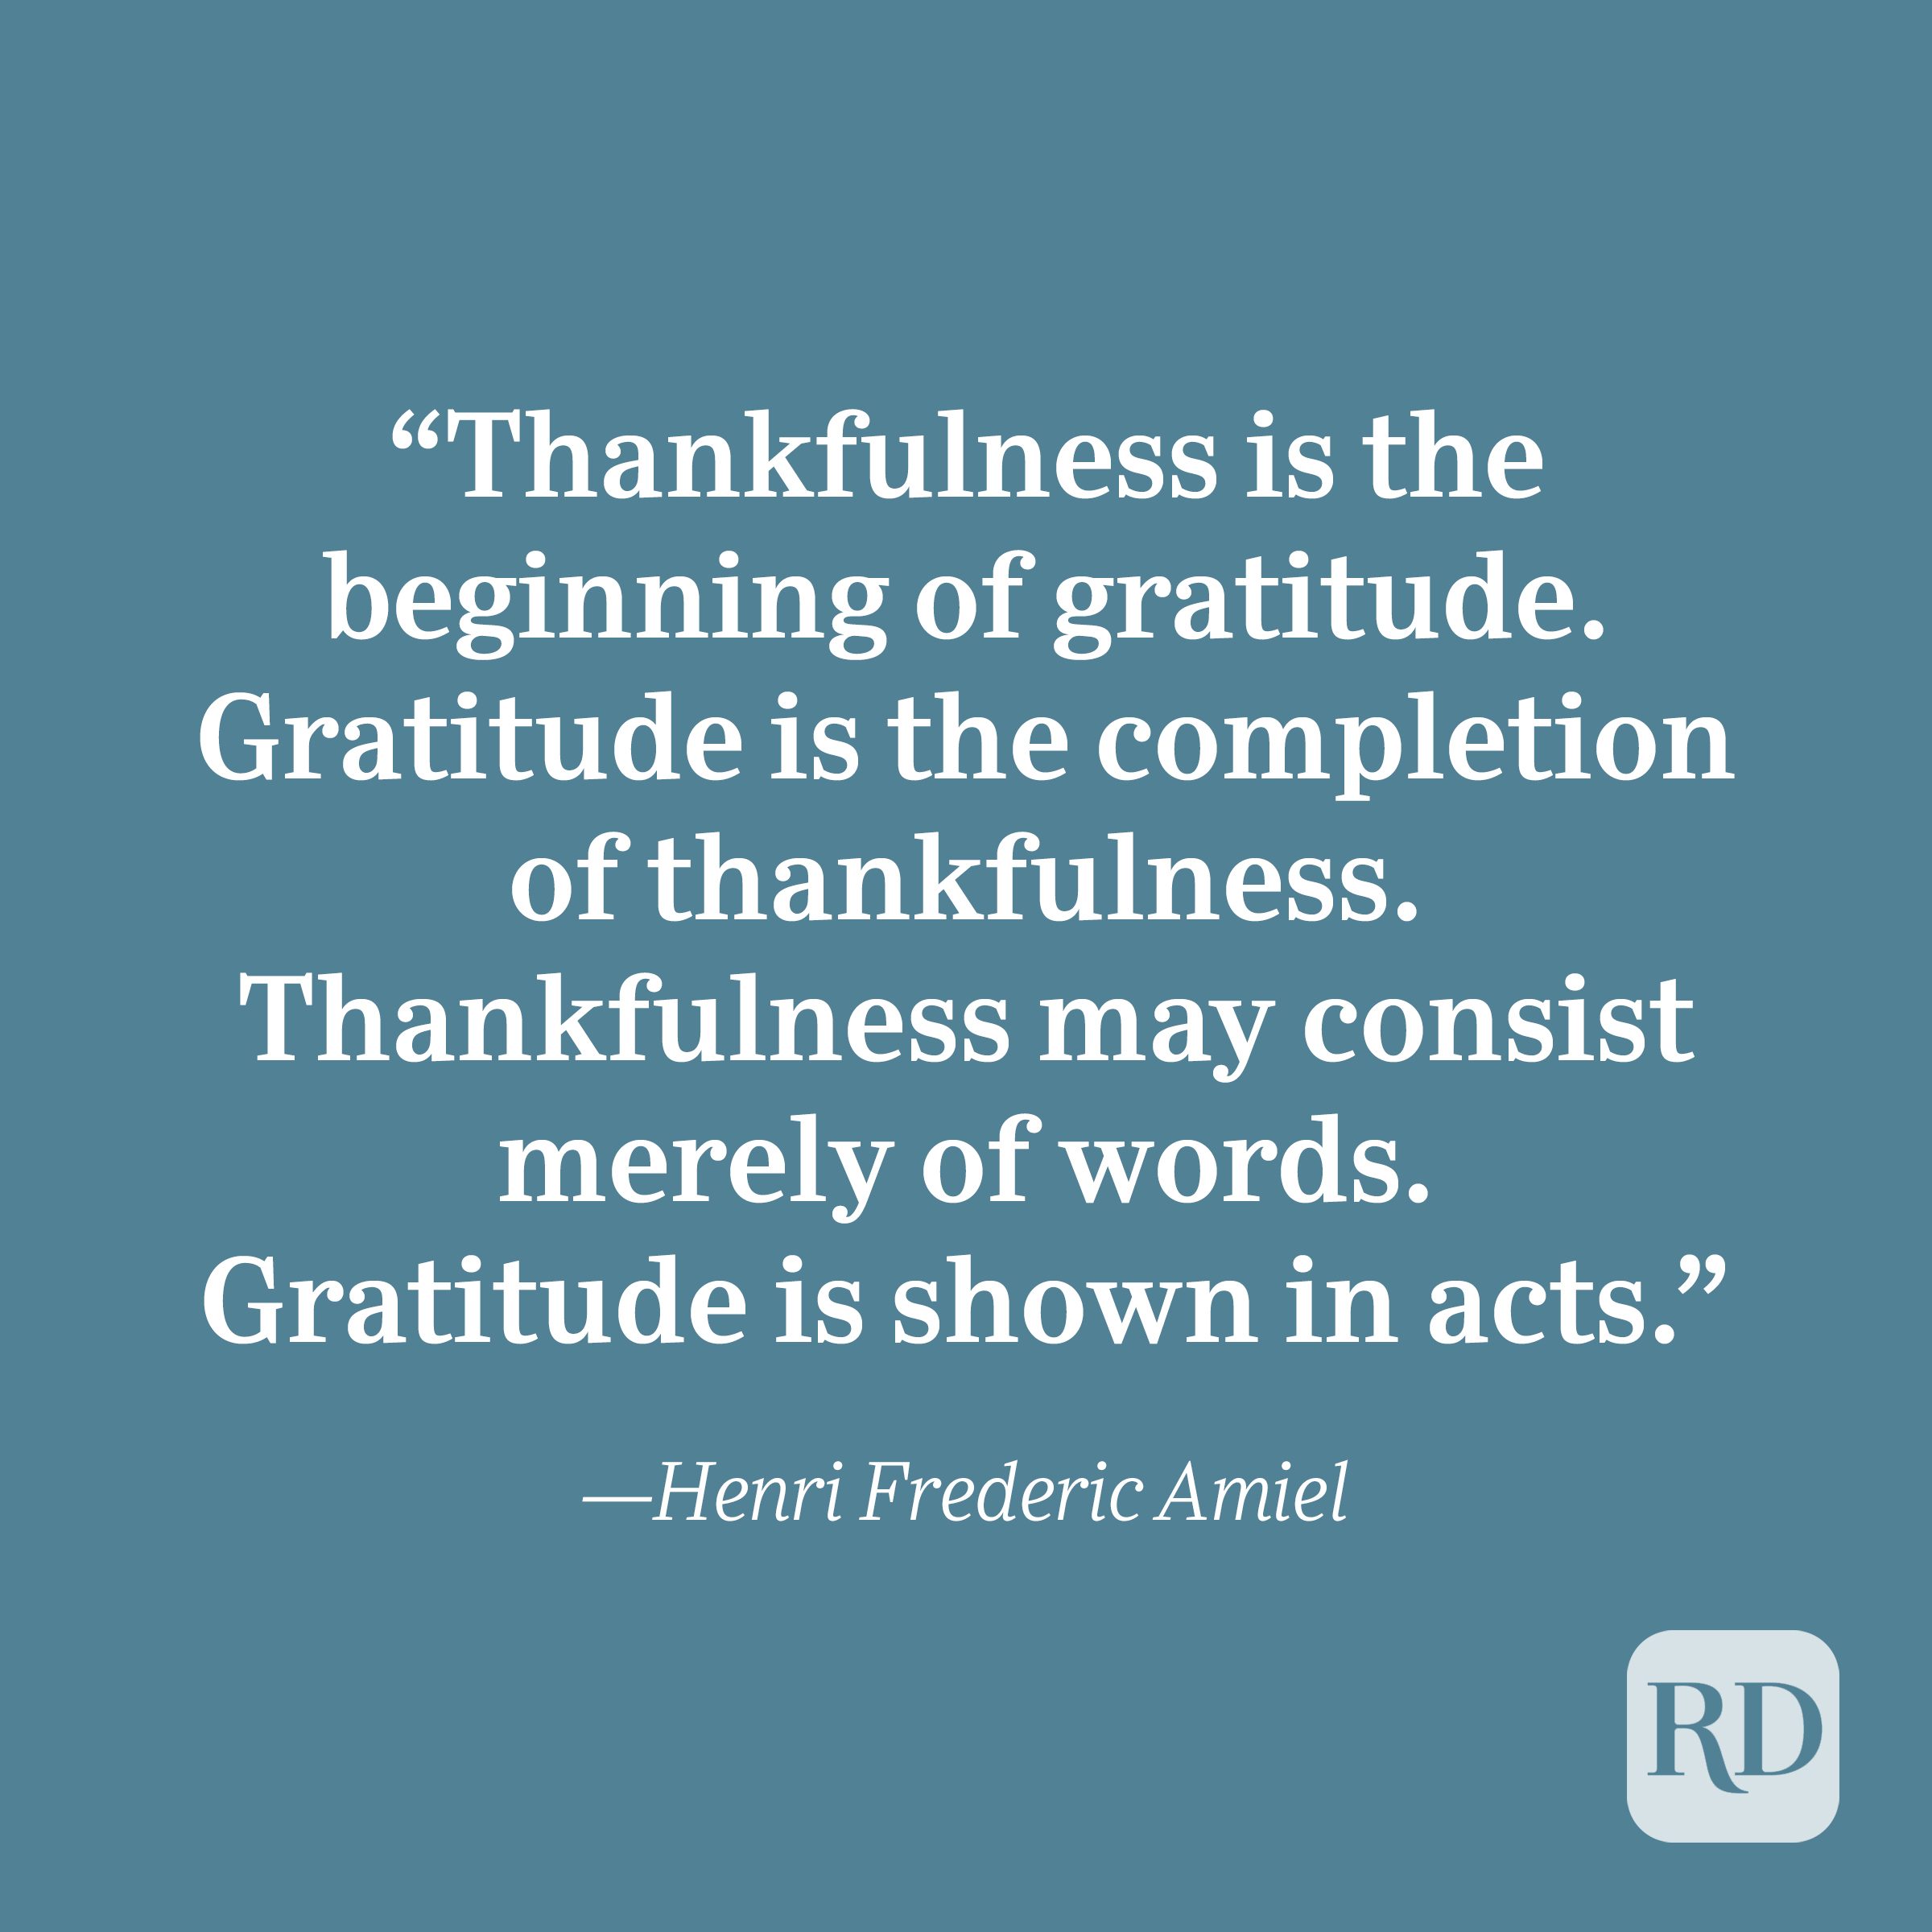 58 Gratitude Quotes - Best Short and Famous Quotes About Gratitude